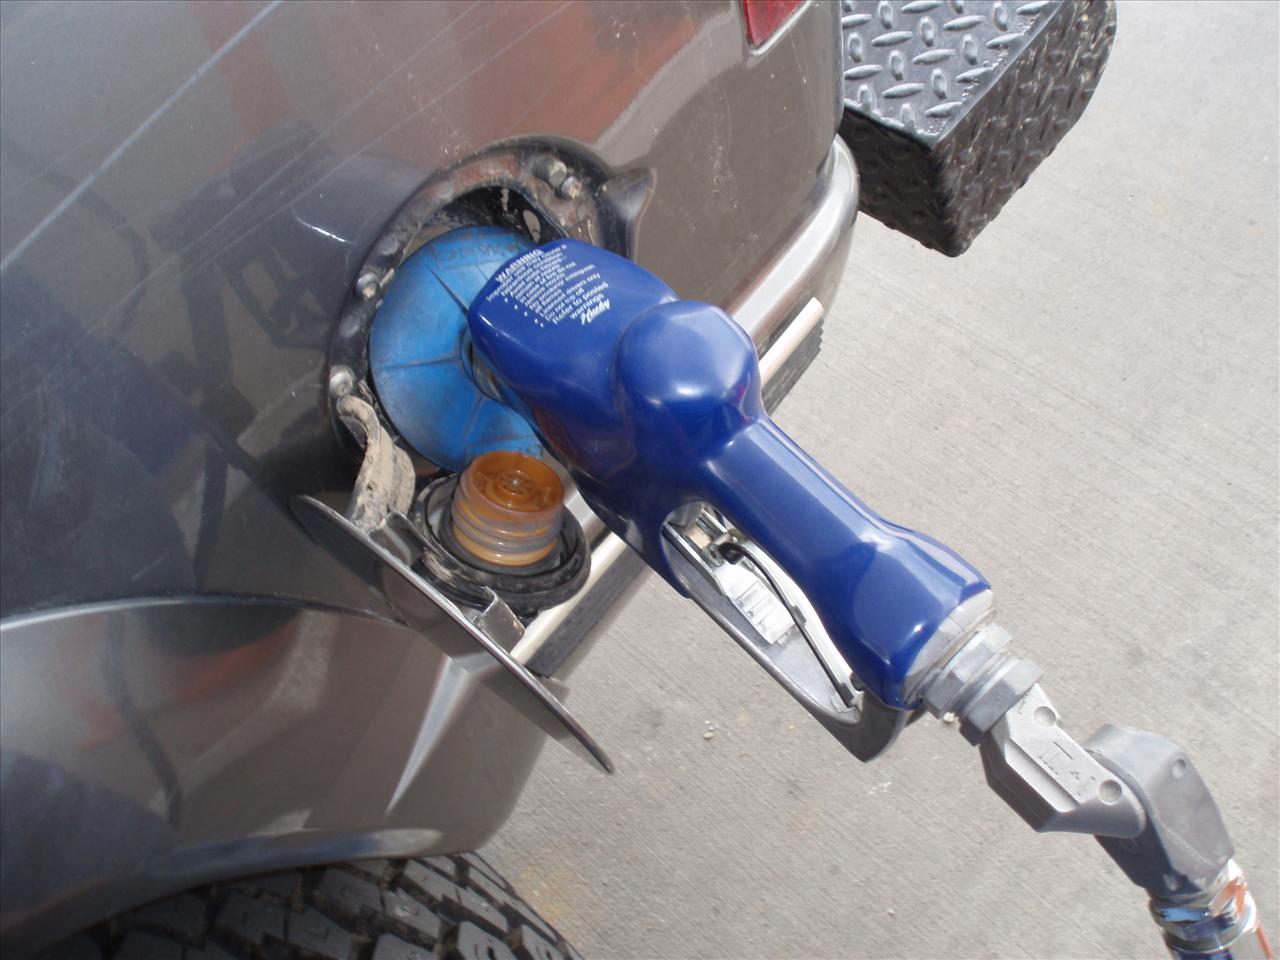 The gas price conundrum